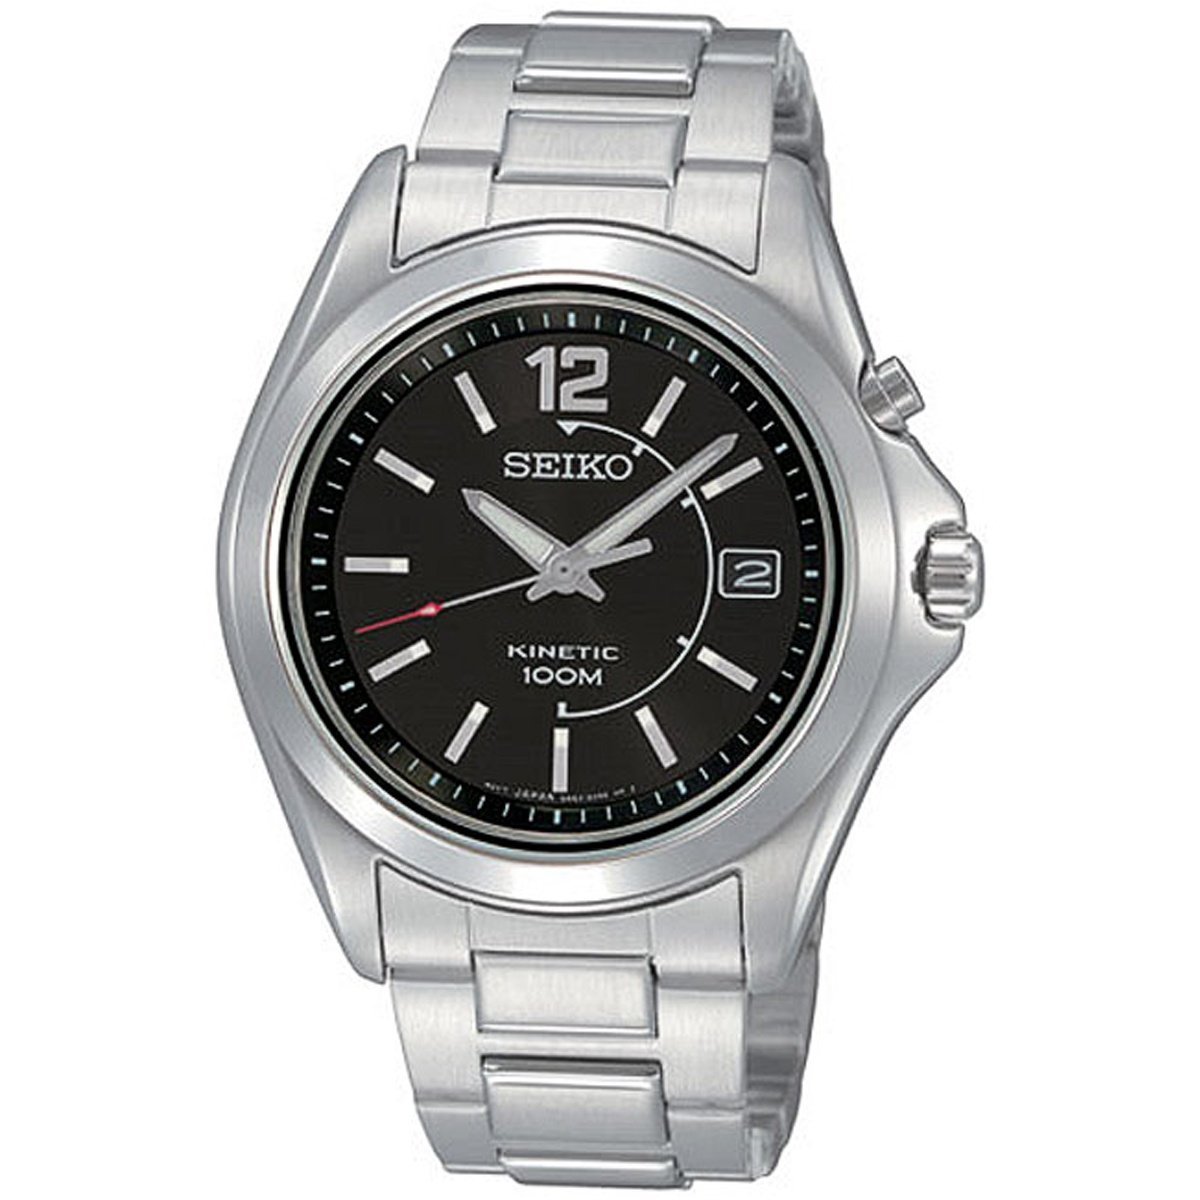 Seiko Men's SKA477P1 Black Dial Kinetic Stainless Steel Watch $94.07